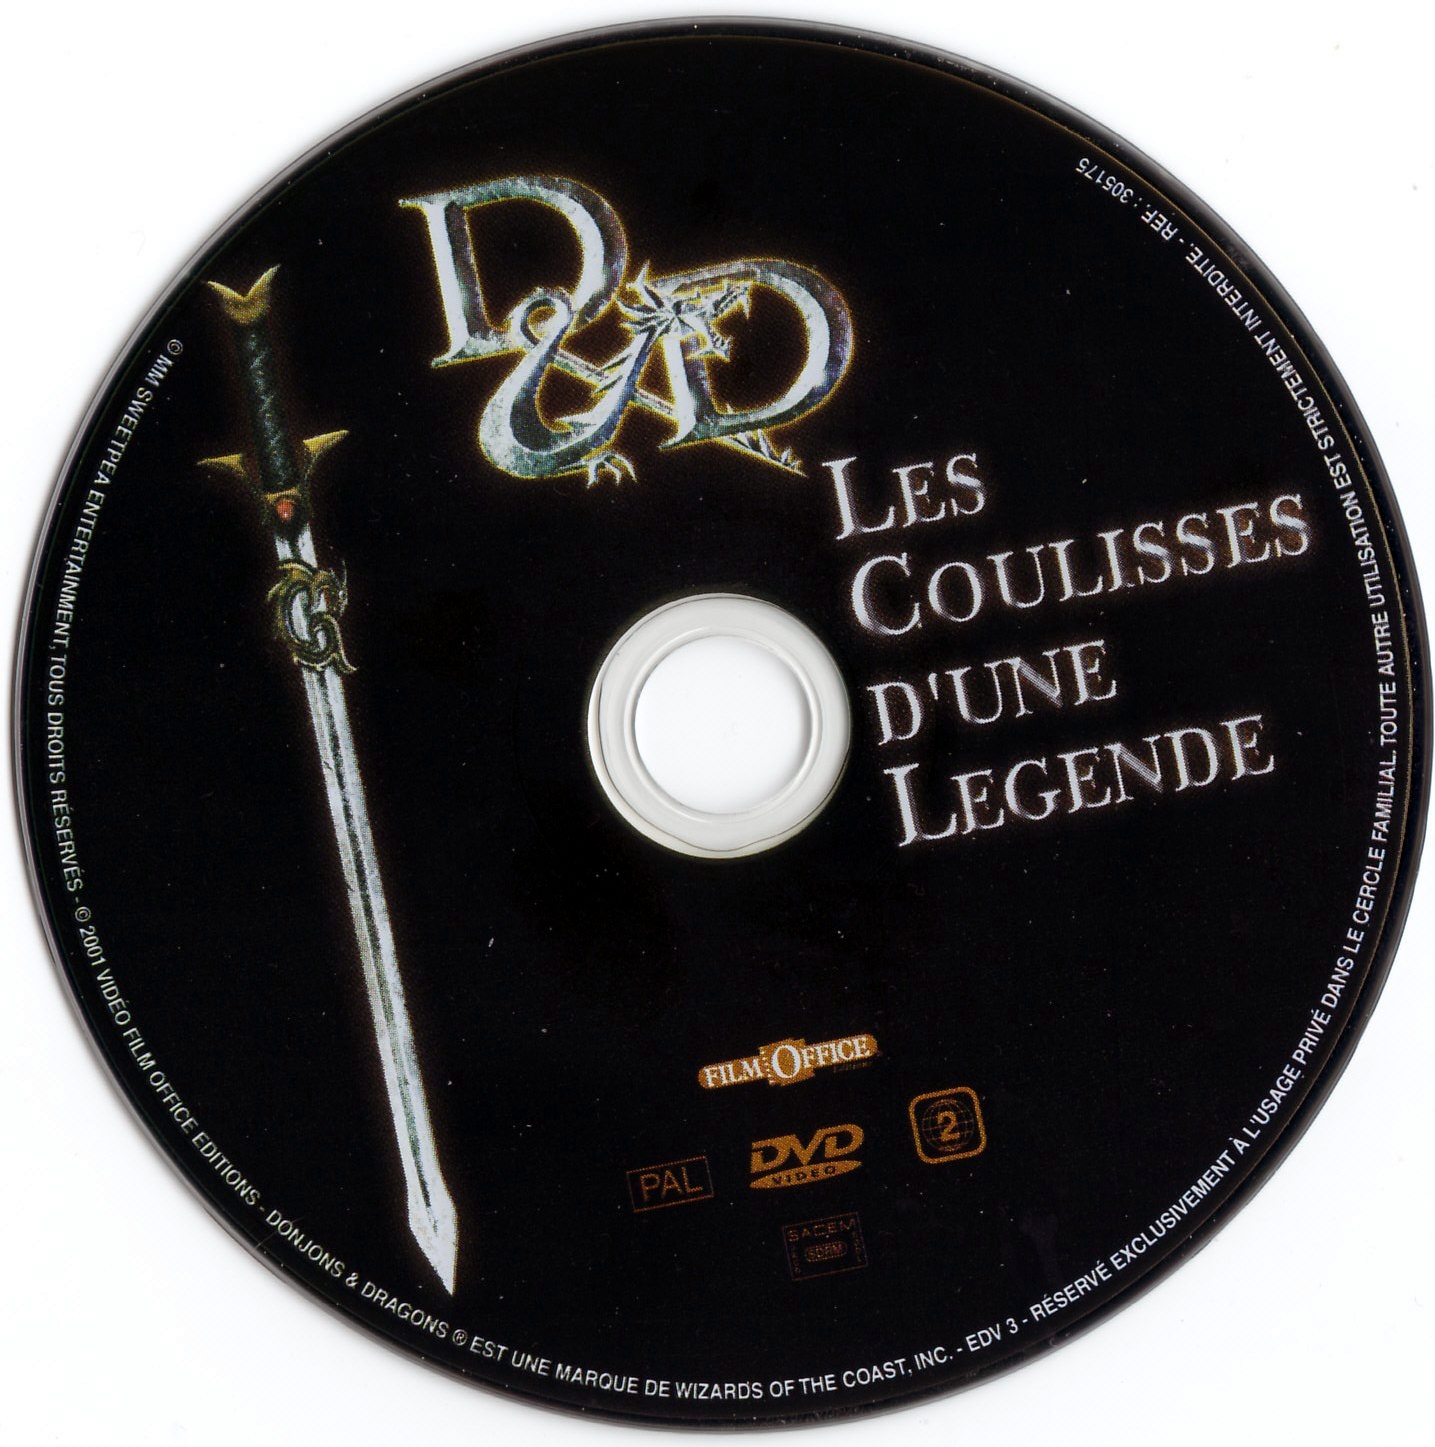 Donjons et dragons DISC 2